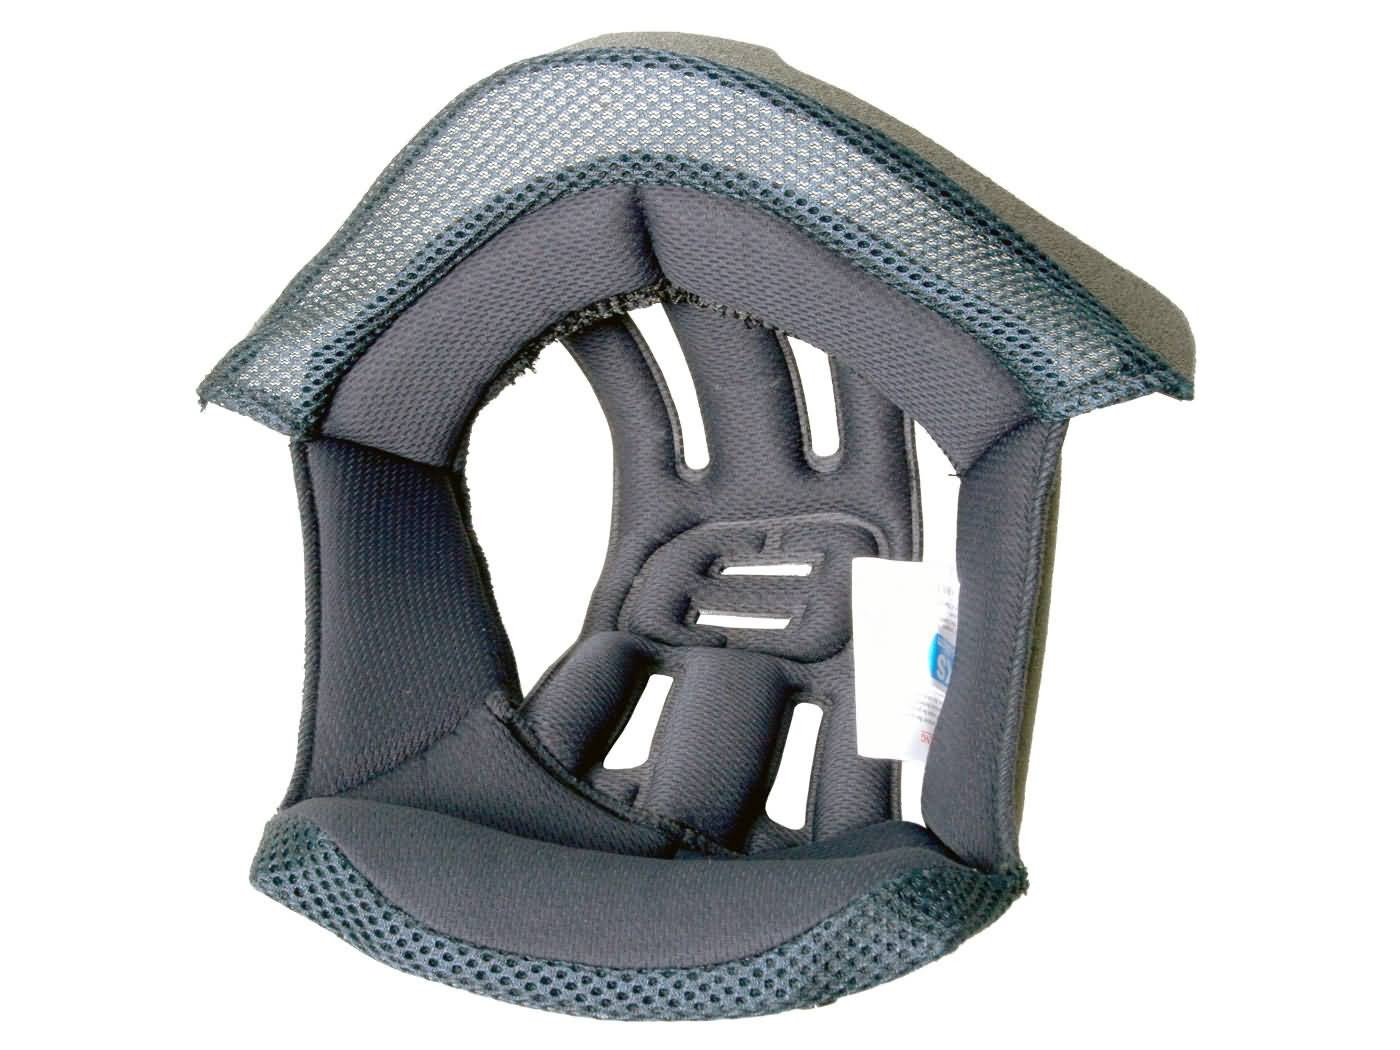 inside pads for helmet Speeds Integral Performance II Size XL